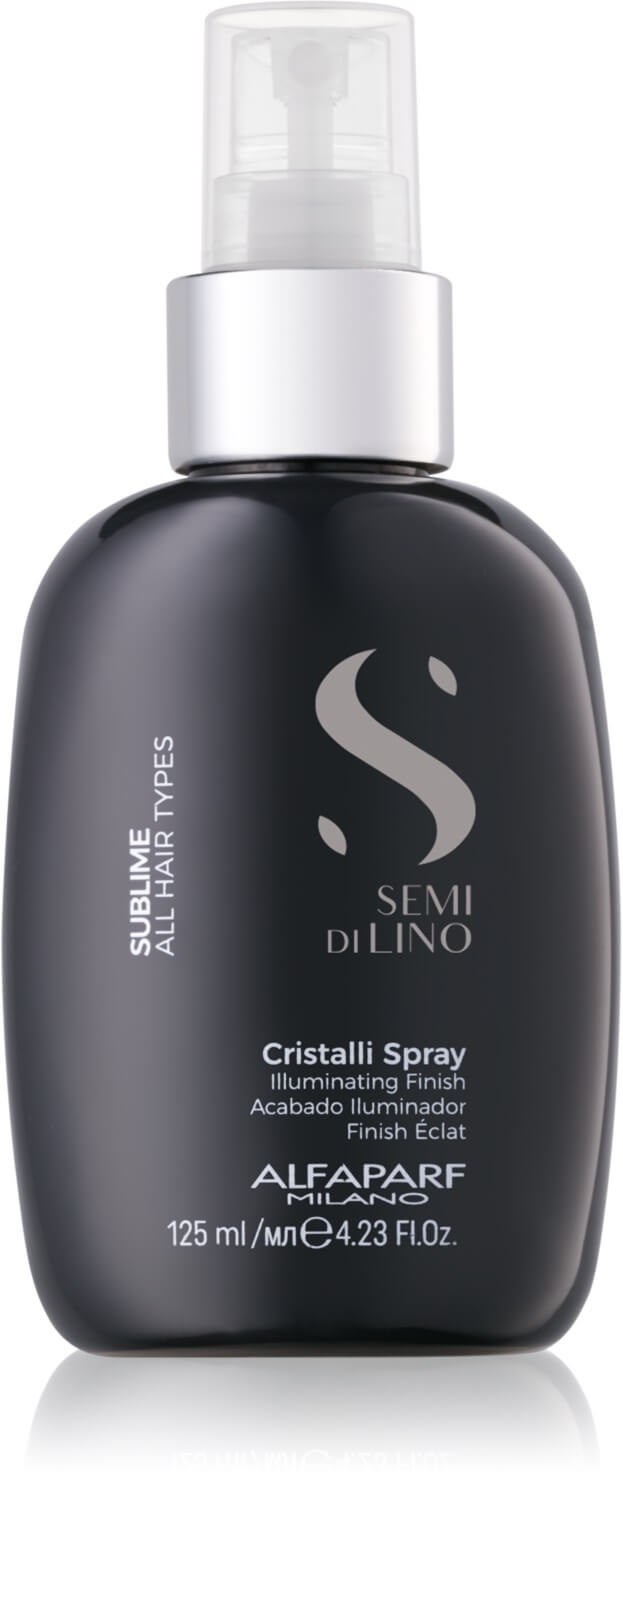 Alfaparf Milano Sprej pro lesk vlasů Semi di Lino Sublime (Cristalli Spray) 125 ml